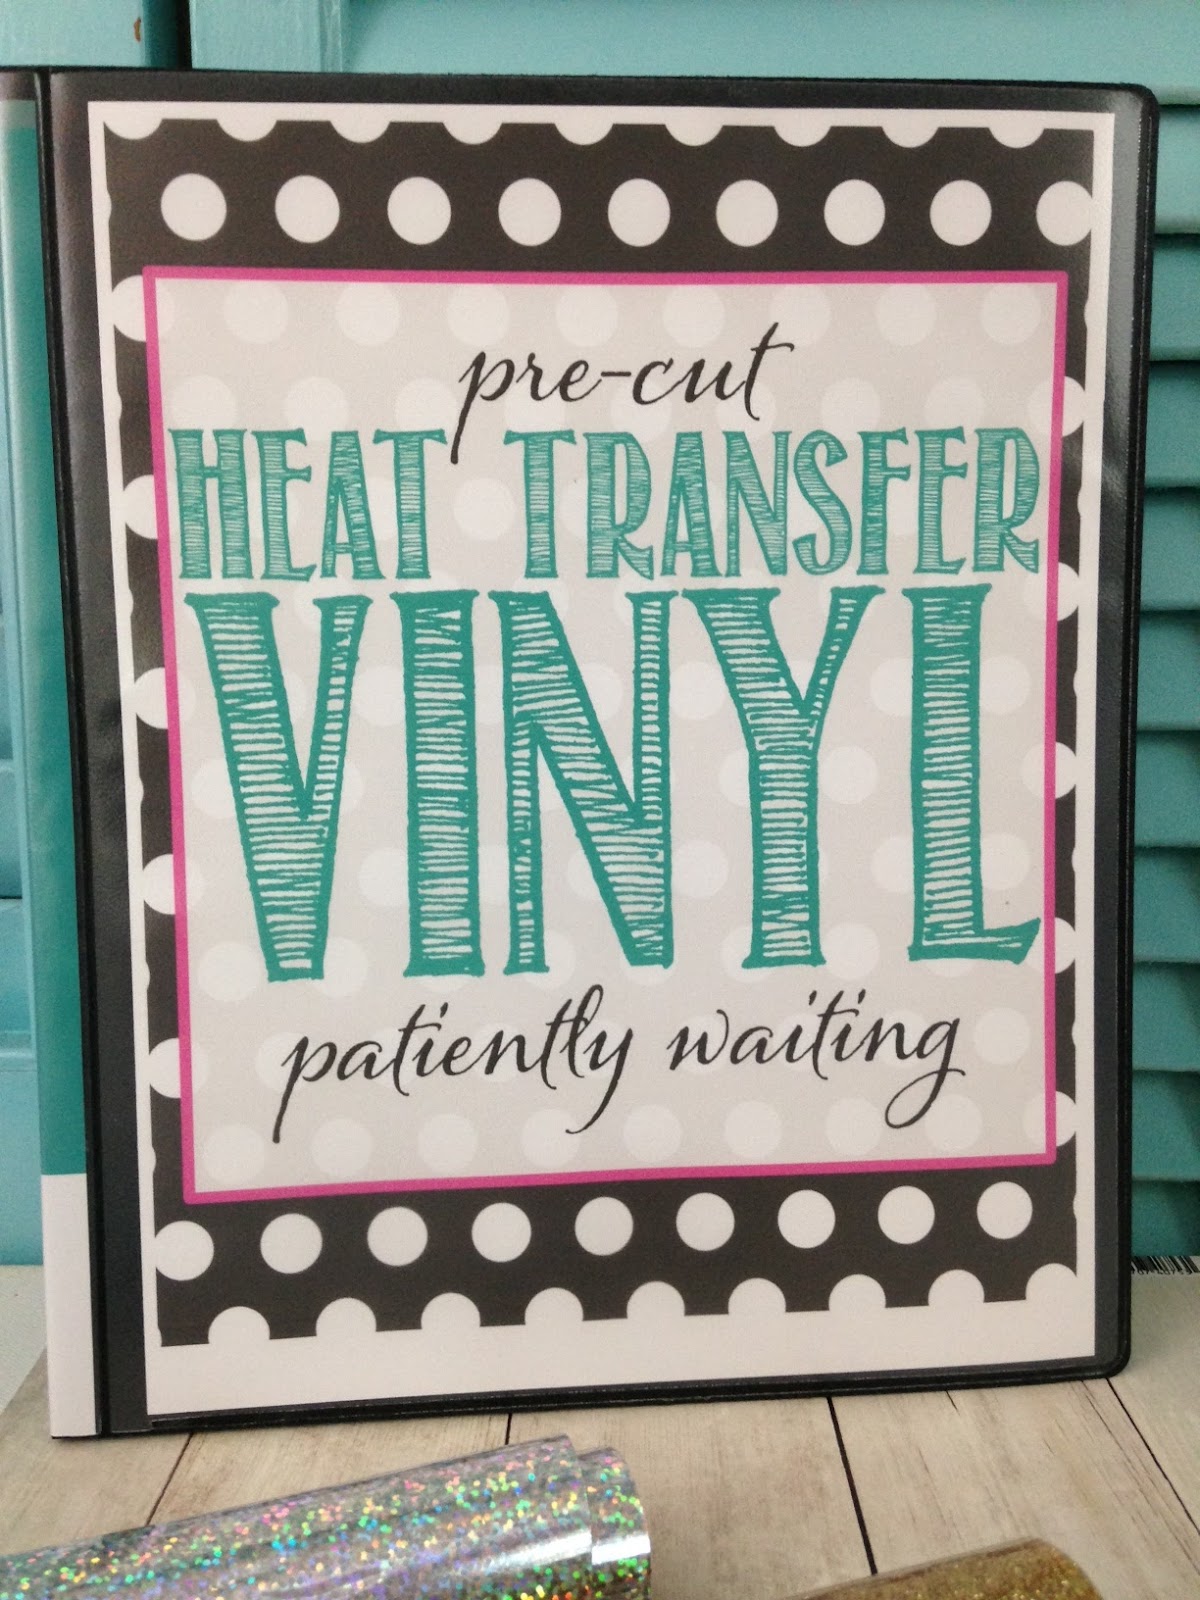 How To Cut Heat Transfer Vinyl With Cricut 